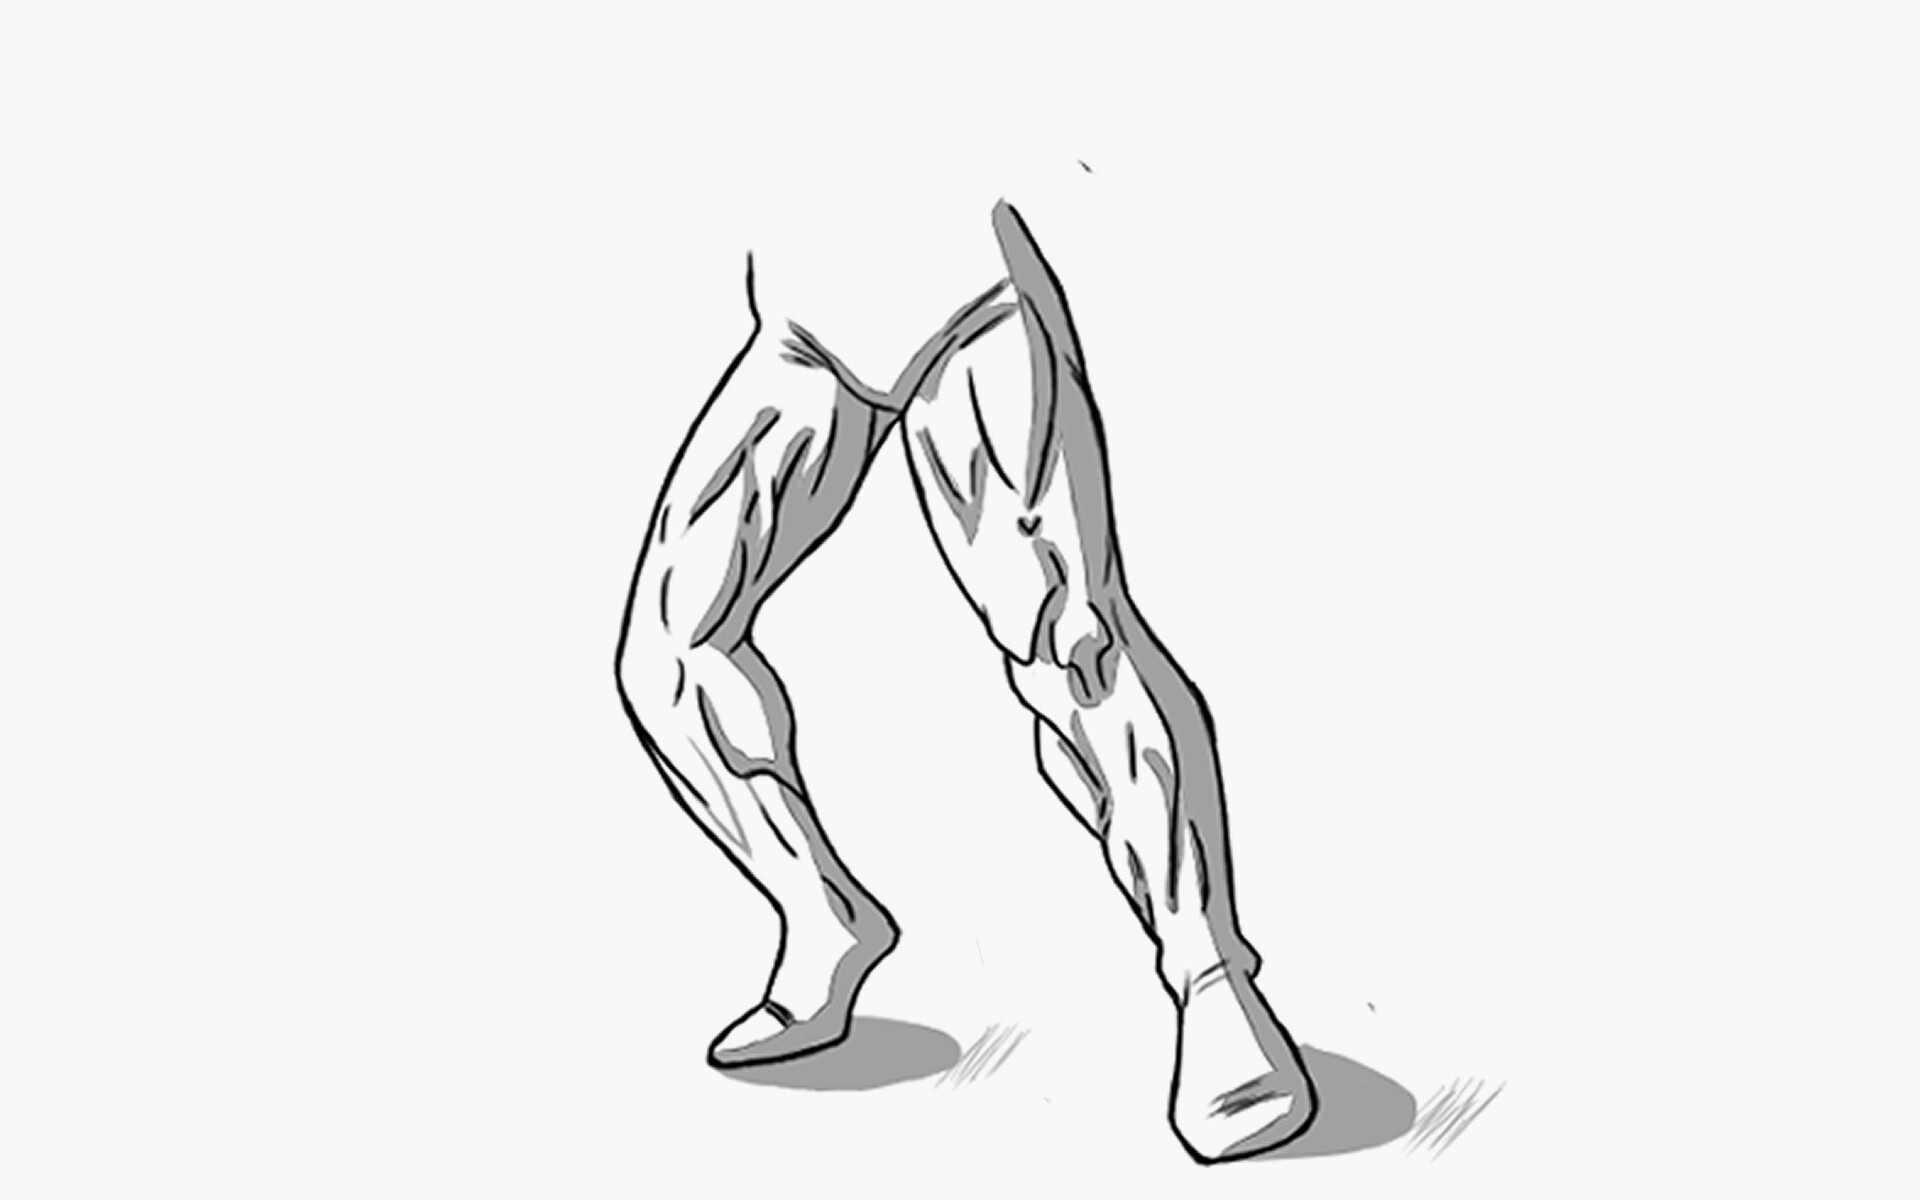 ArtStation - Anatomy of the Human Legs